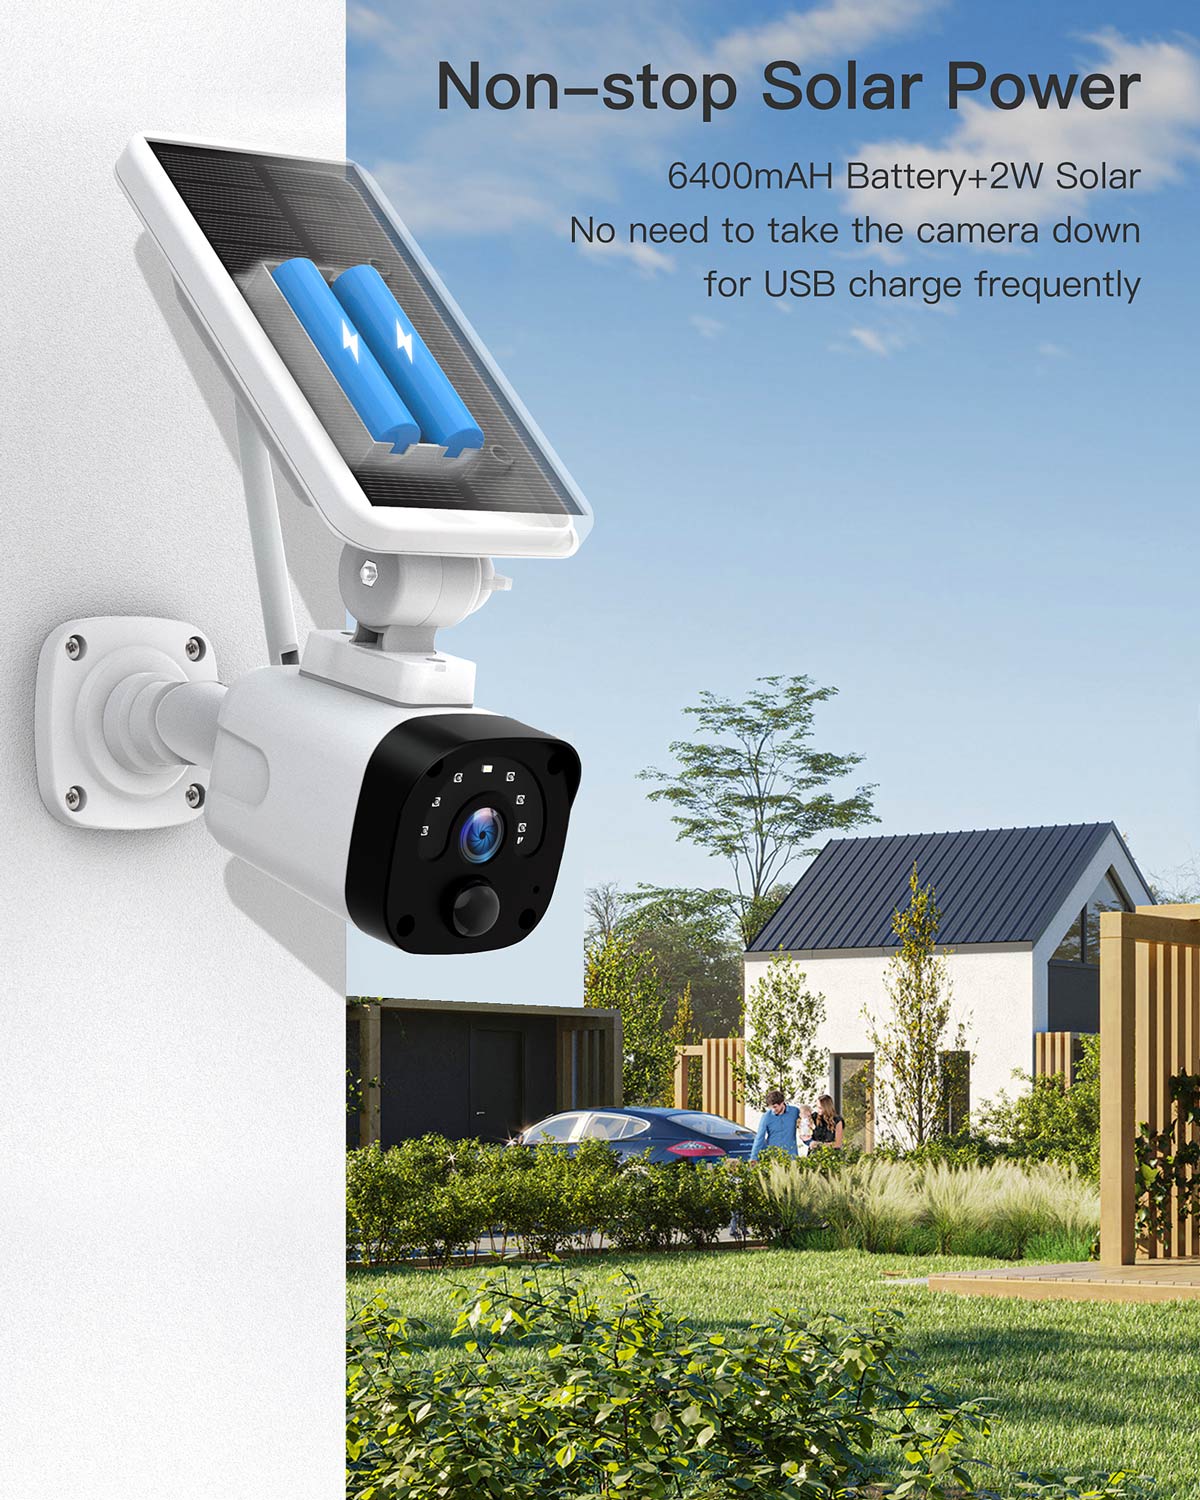 Campark W602 3MP Wireless WiFi Outdoor Solar Security Camera System